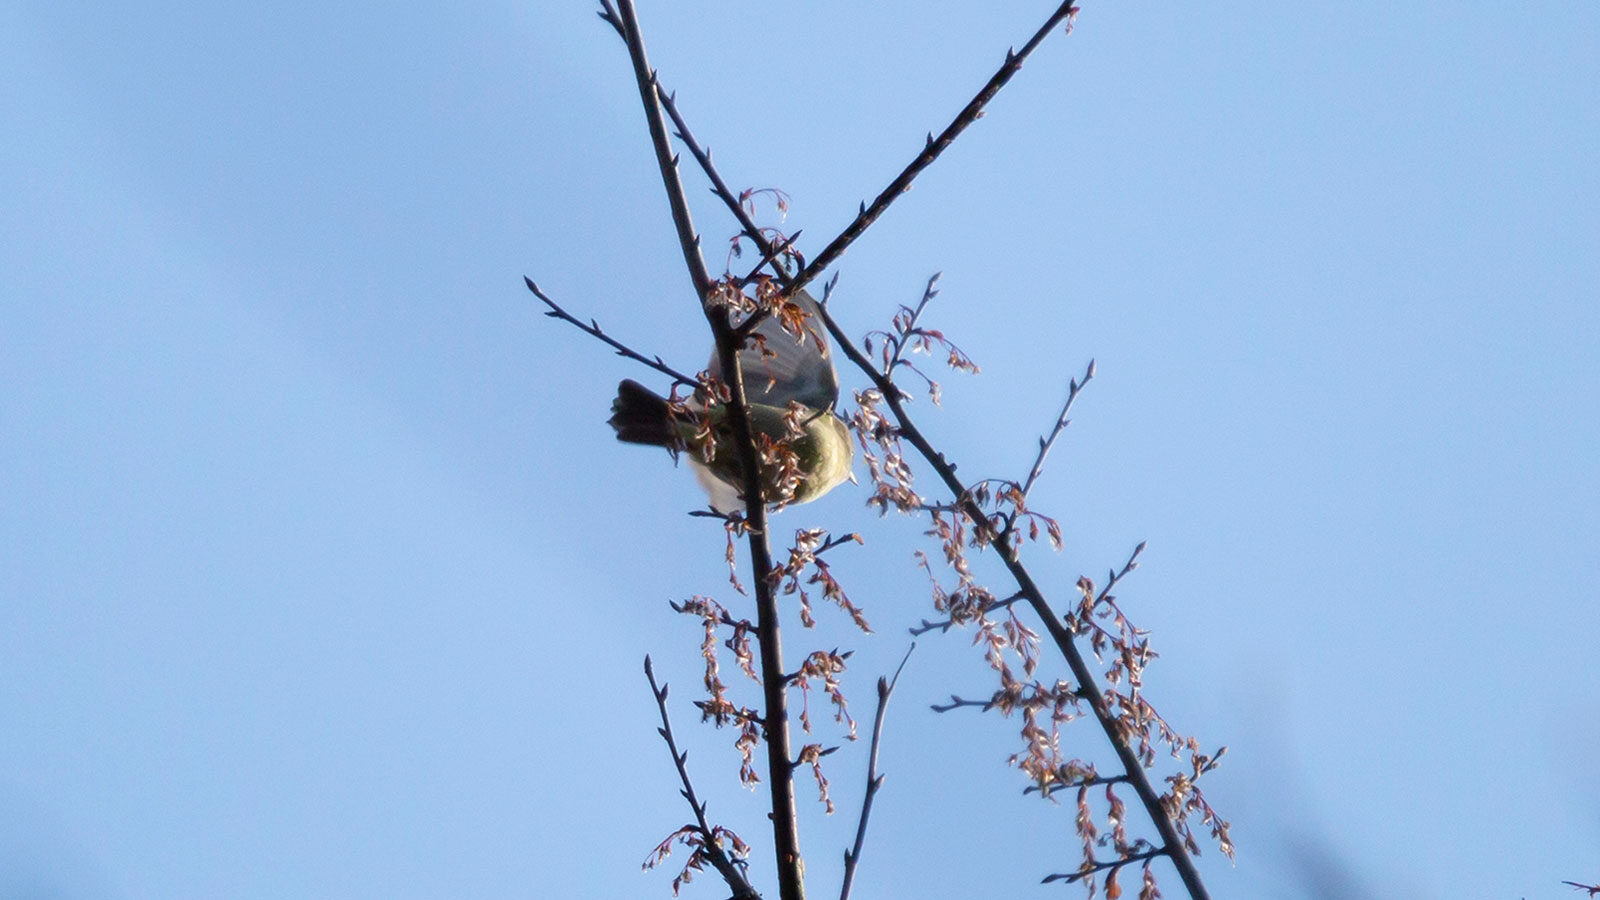 Mourning warbler landing on a branch